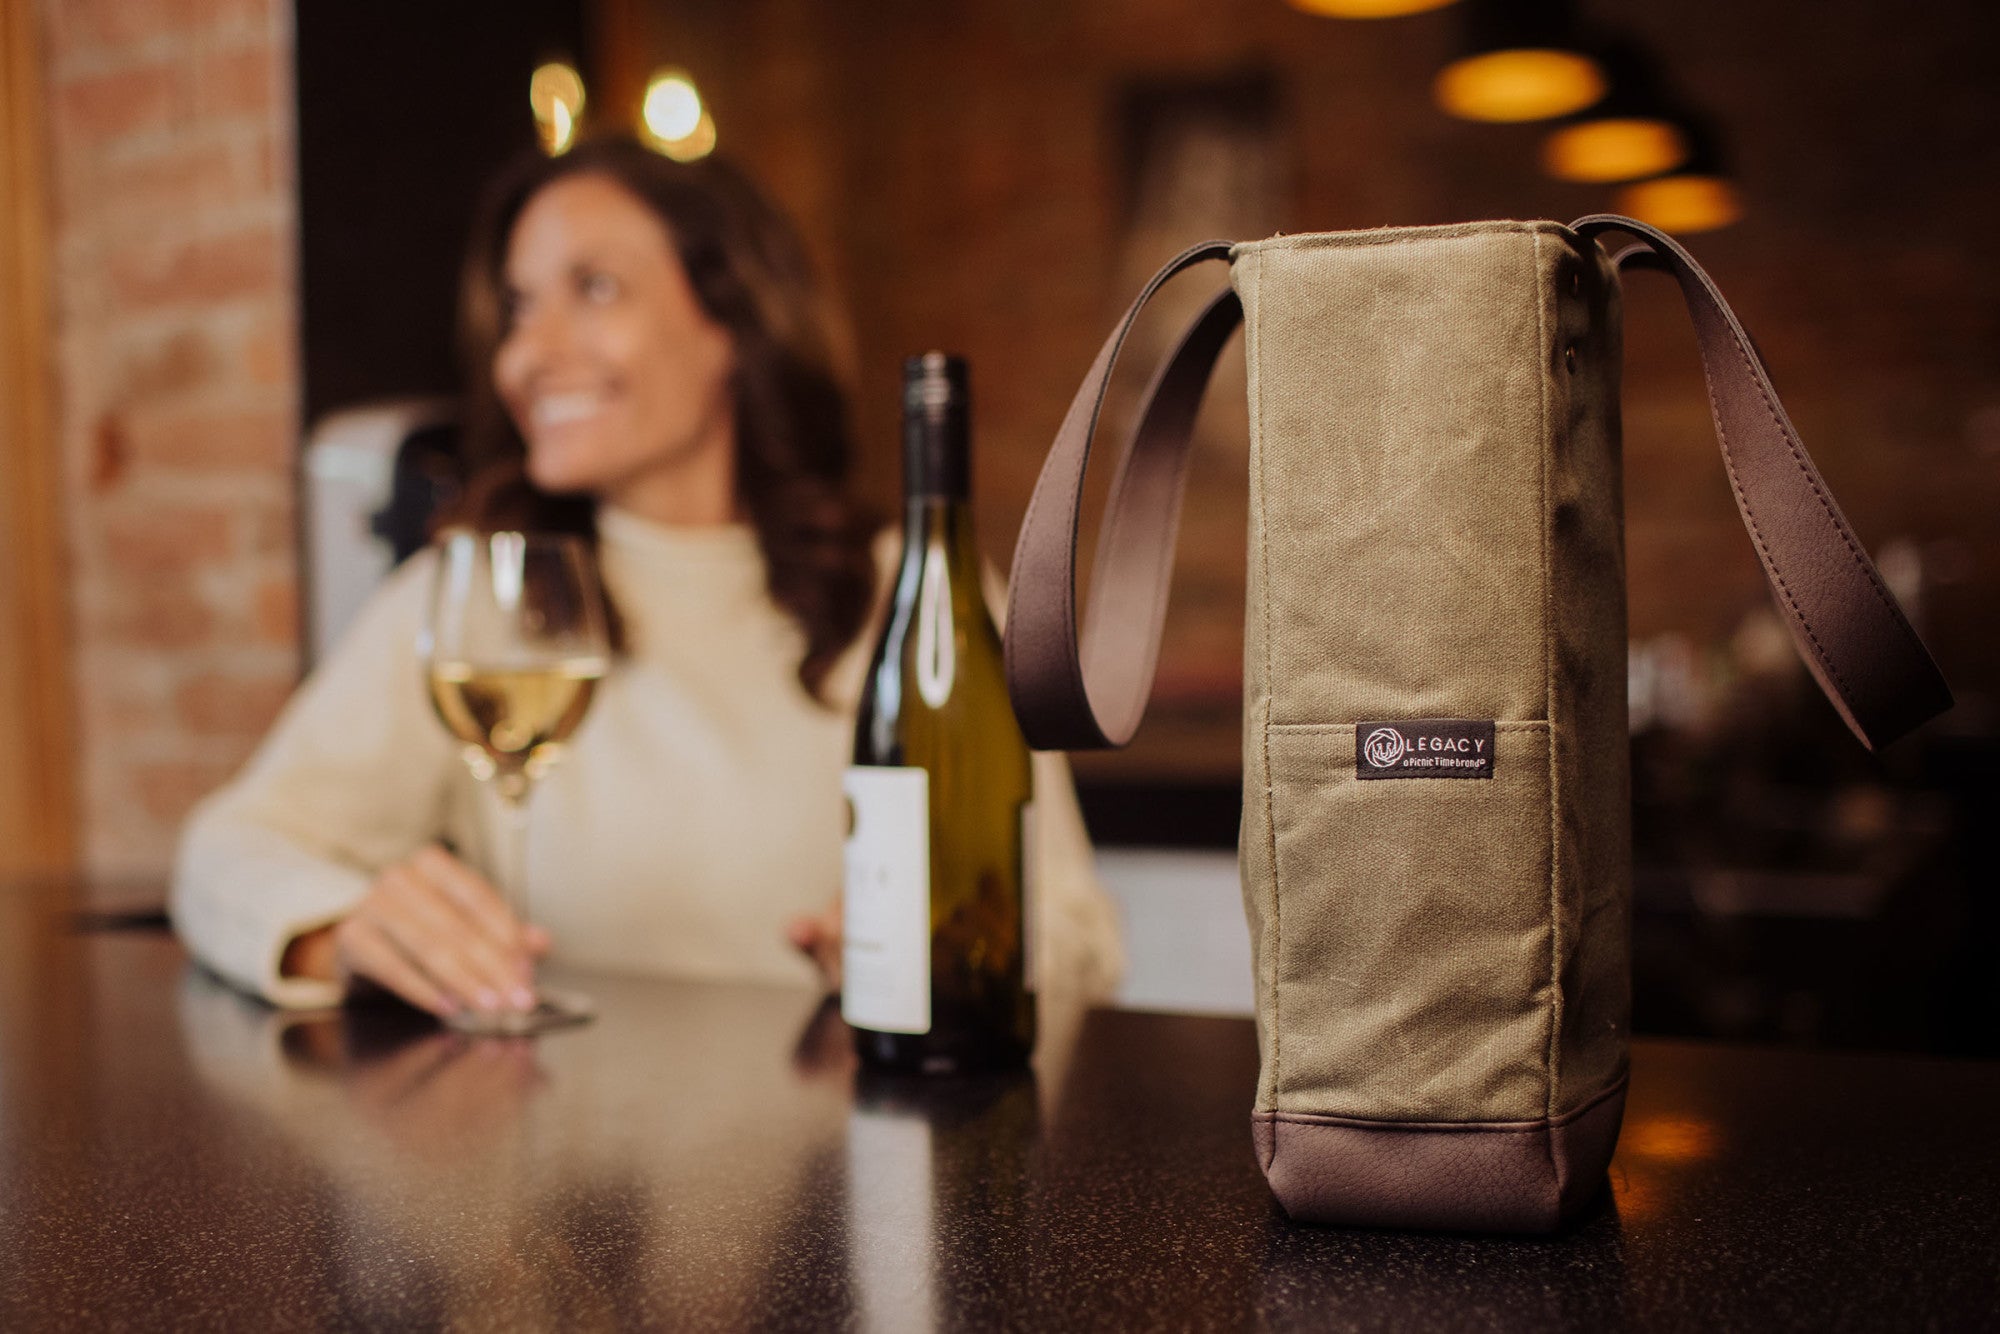 Illinois Fighting Illini - 2 Bottle Insulated Wine Cooler Bag